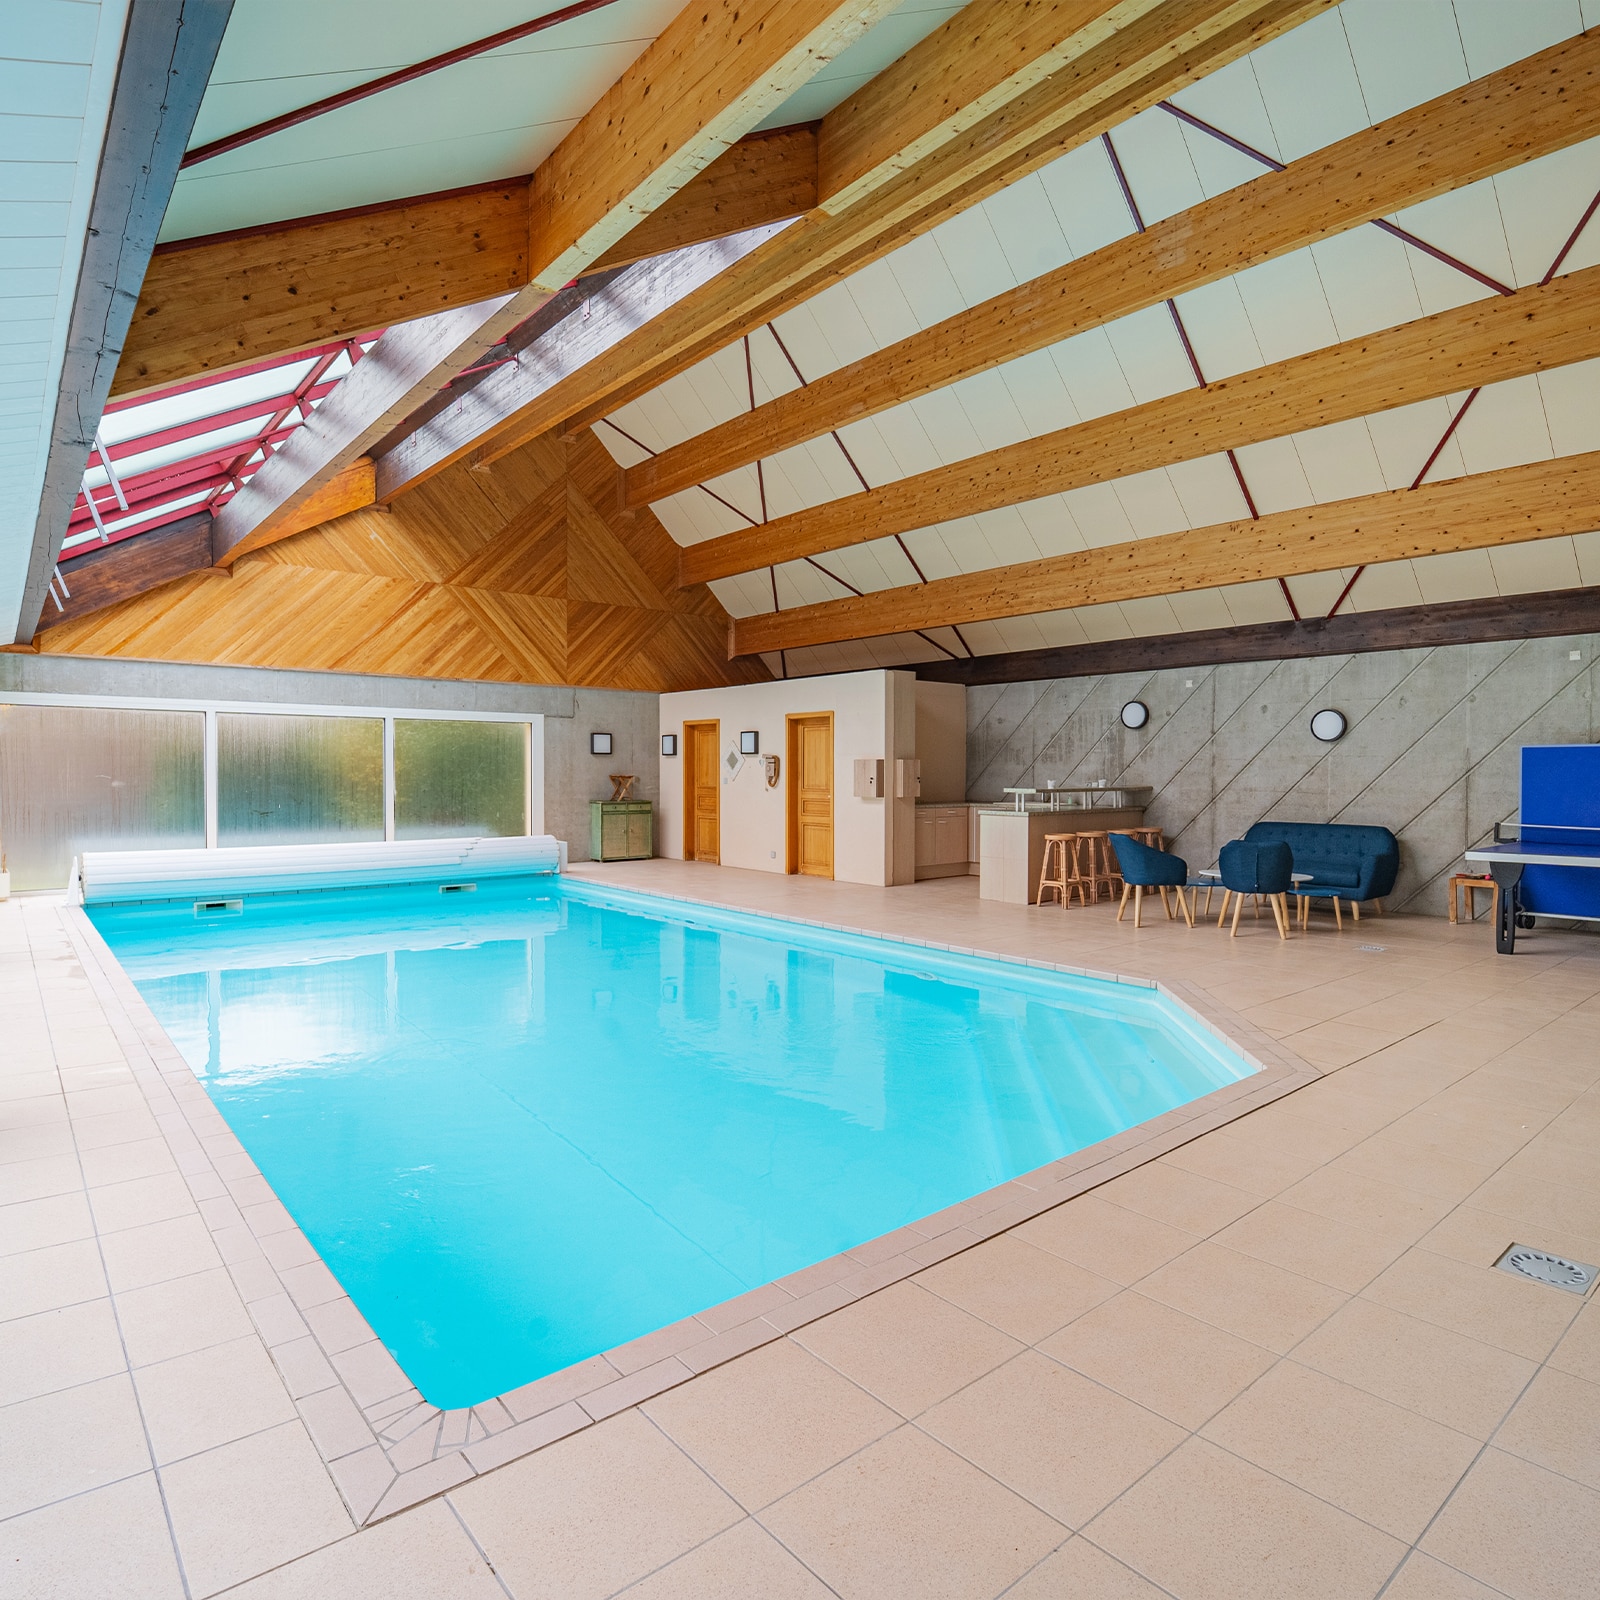 Location maison piscine intérieure Strasbourg